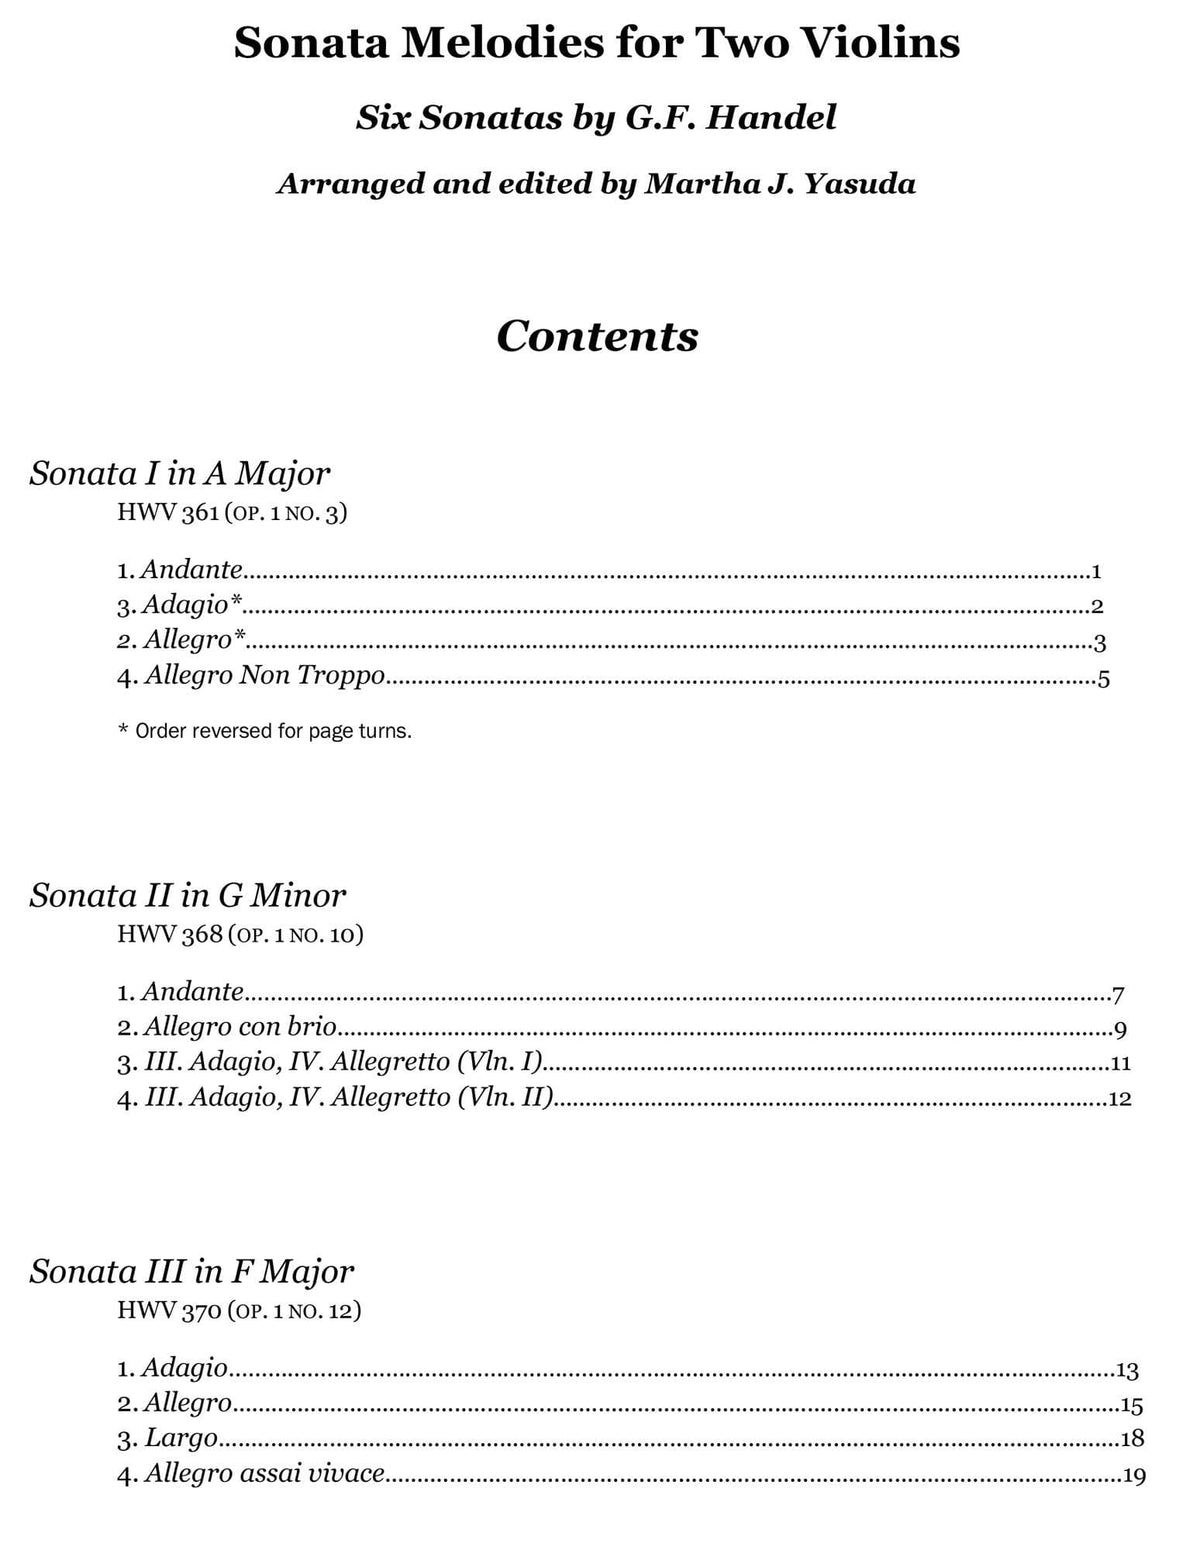 Yasuda, Martha - Sonata Melodies For Two Violins, 2nd Edition - Digital Download